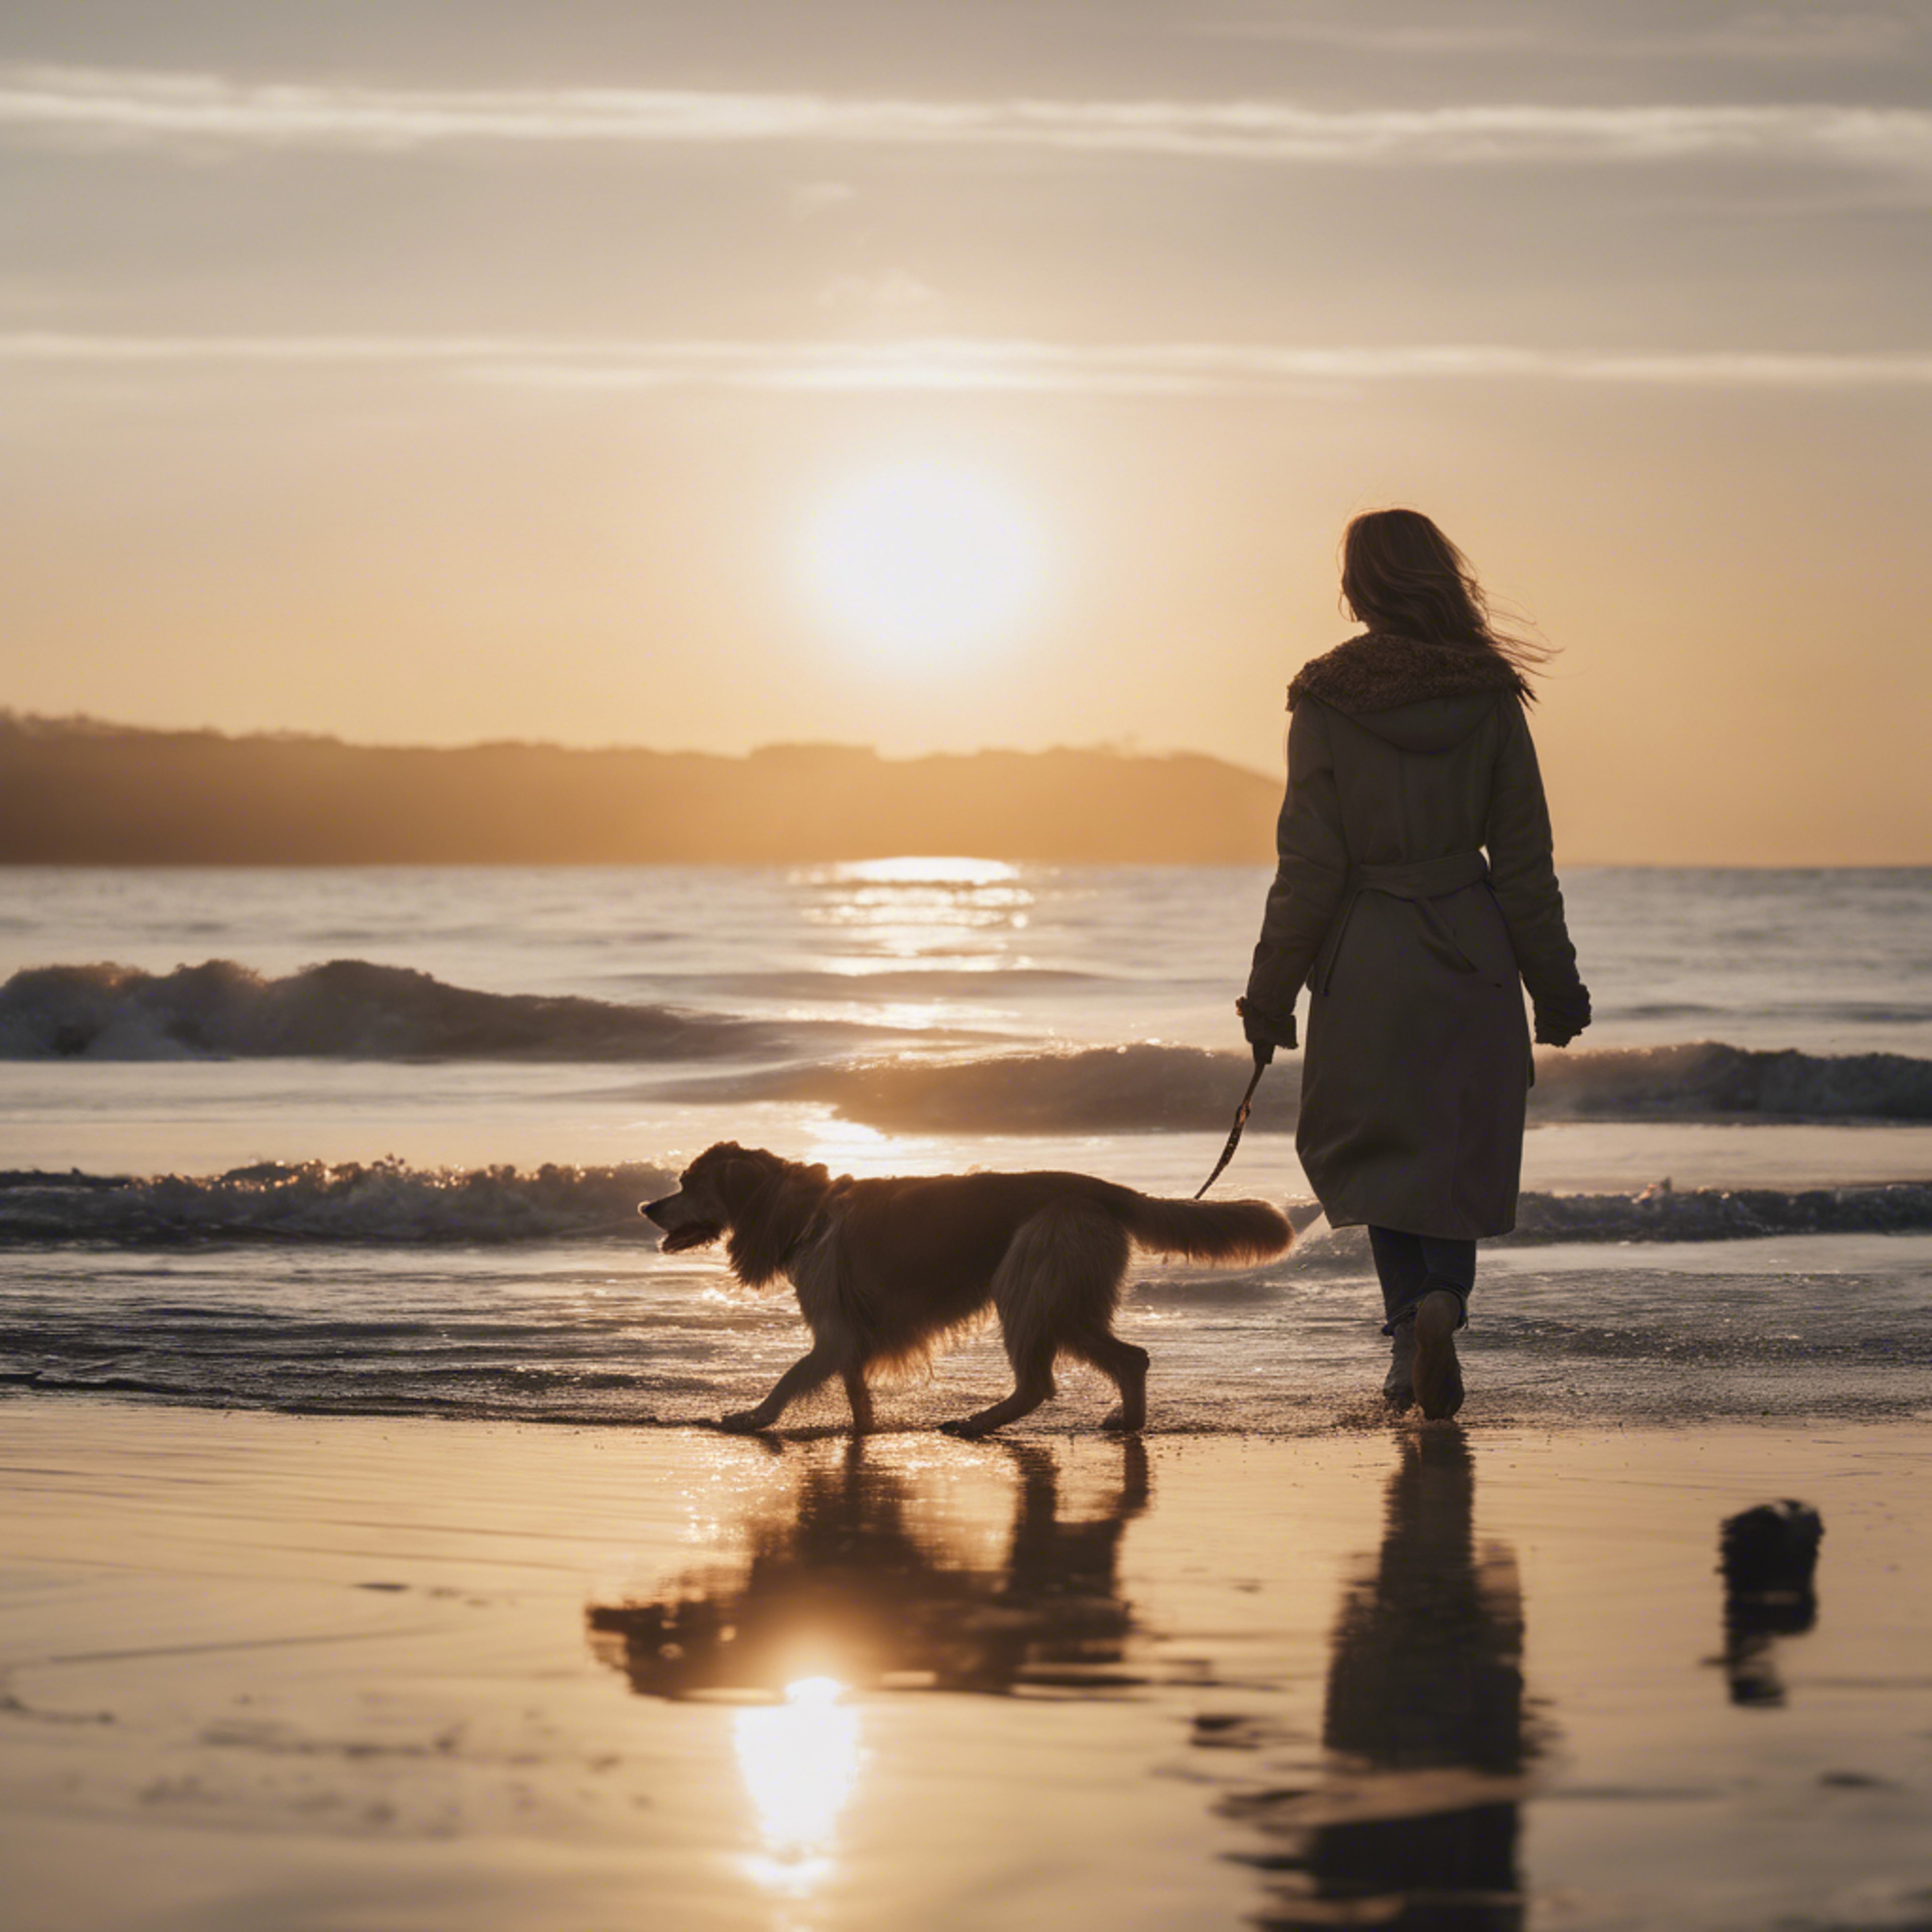 A beach scene with a woman walking her enthusiastic dog along the water's edge at sunset. duvar kağıdı[f9bc2ab3990f4caba062]